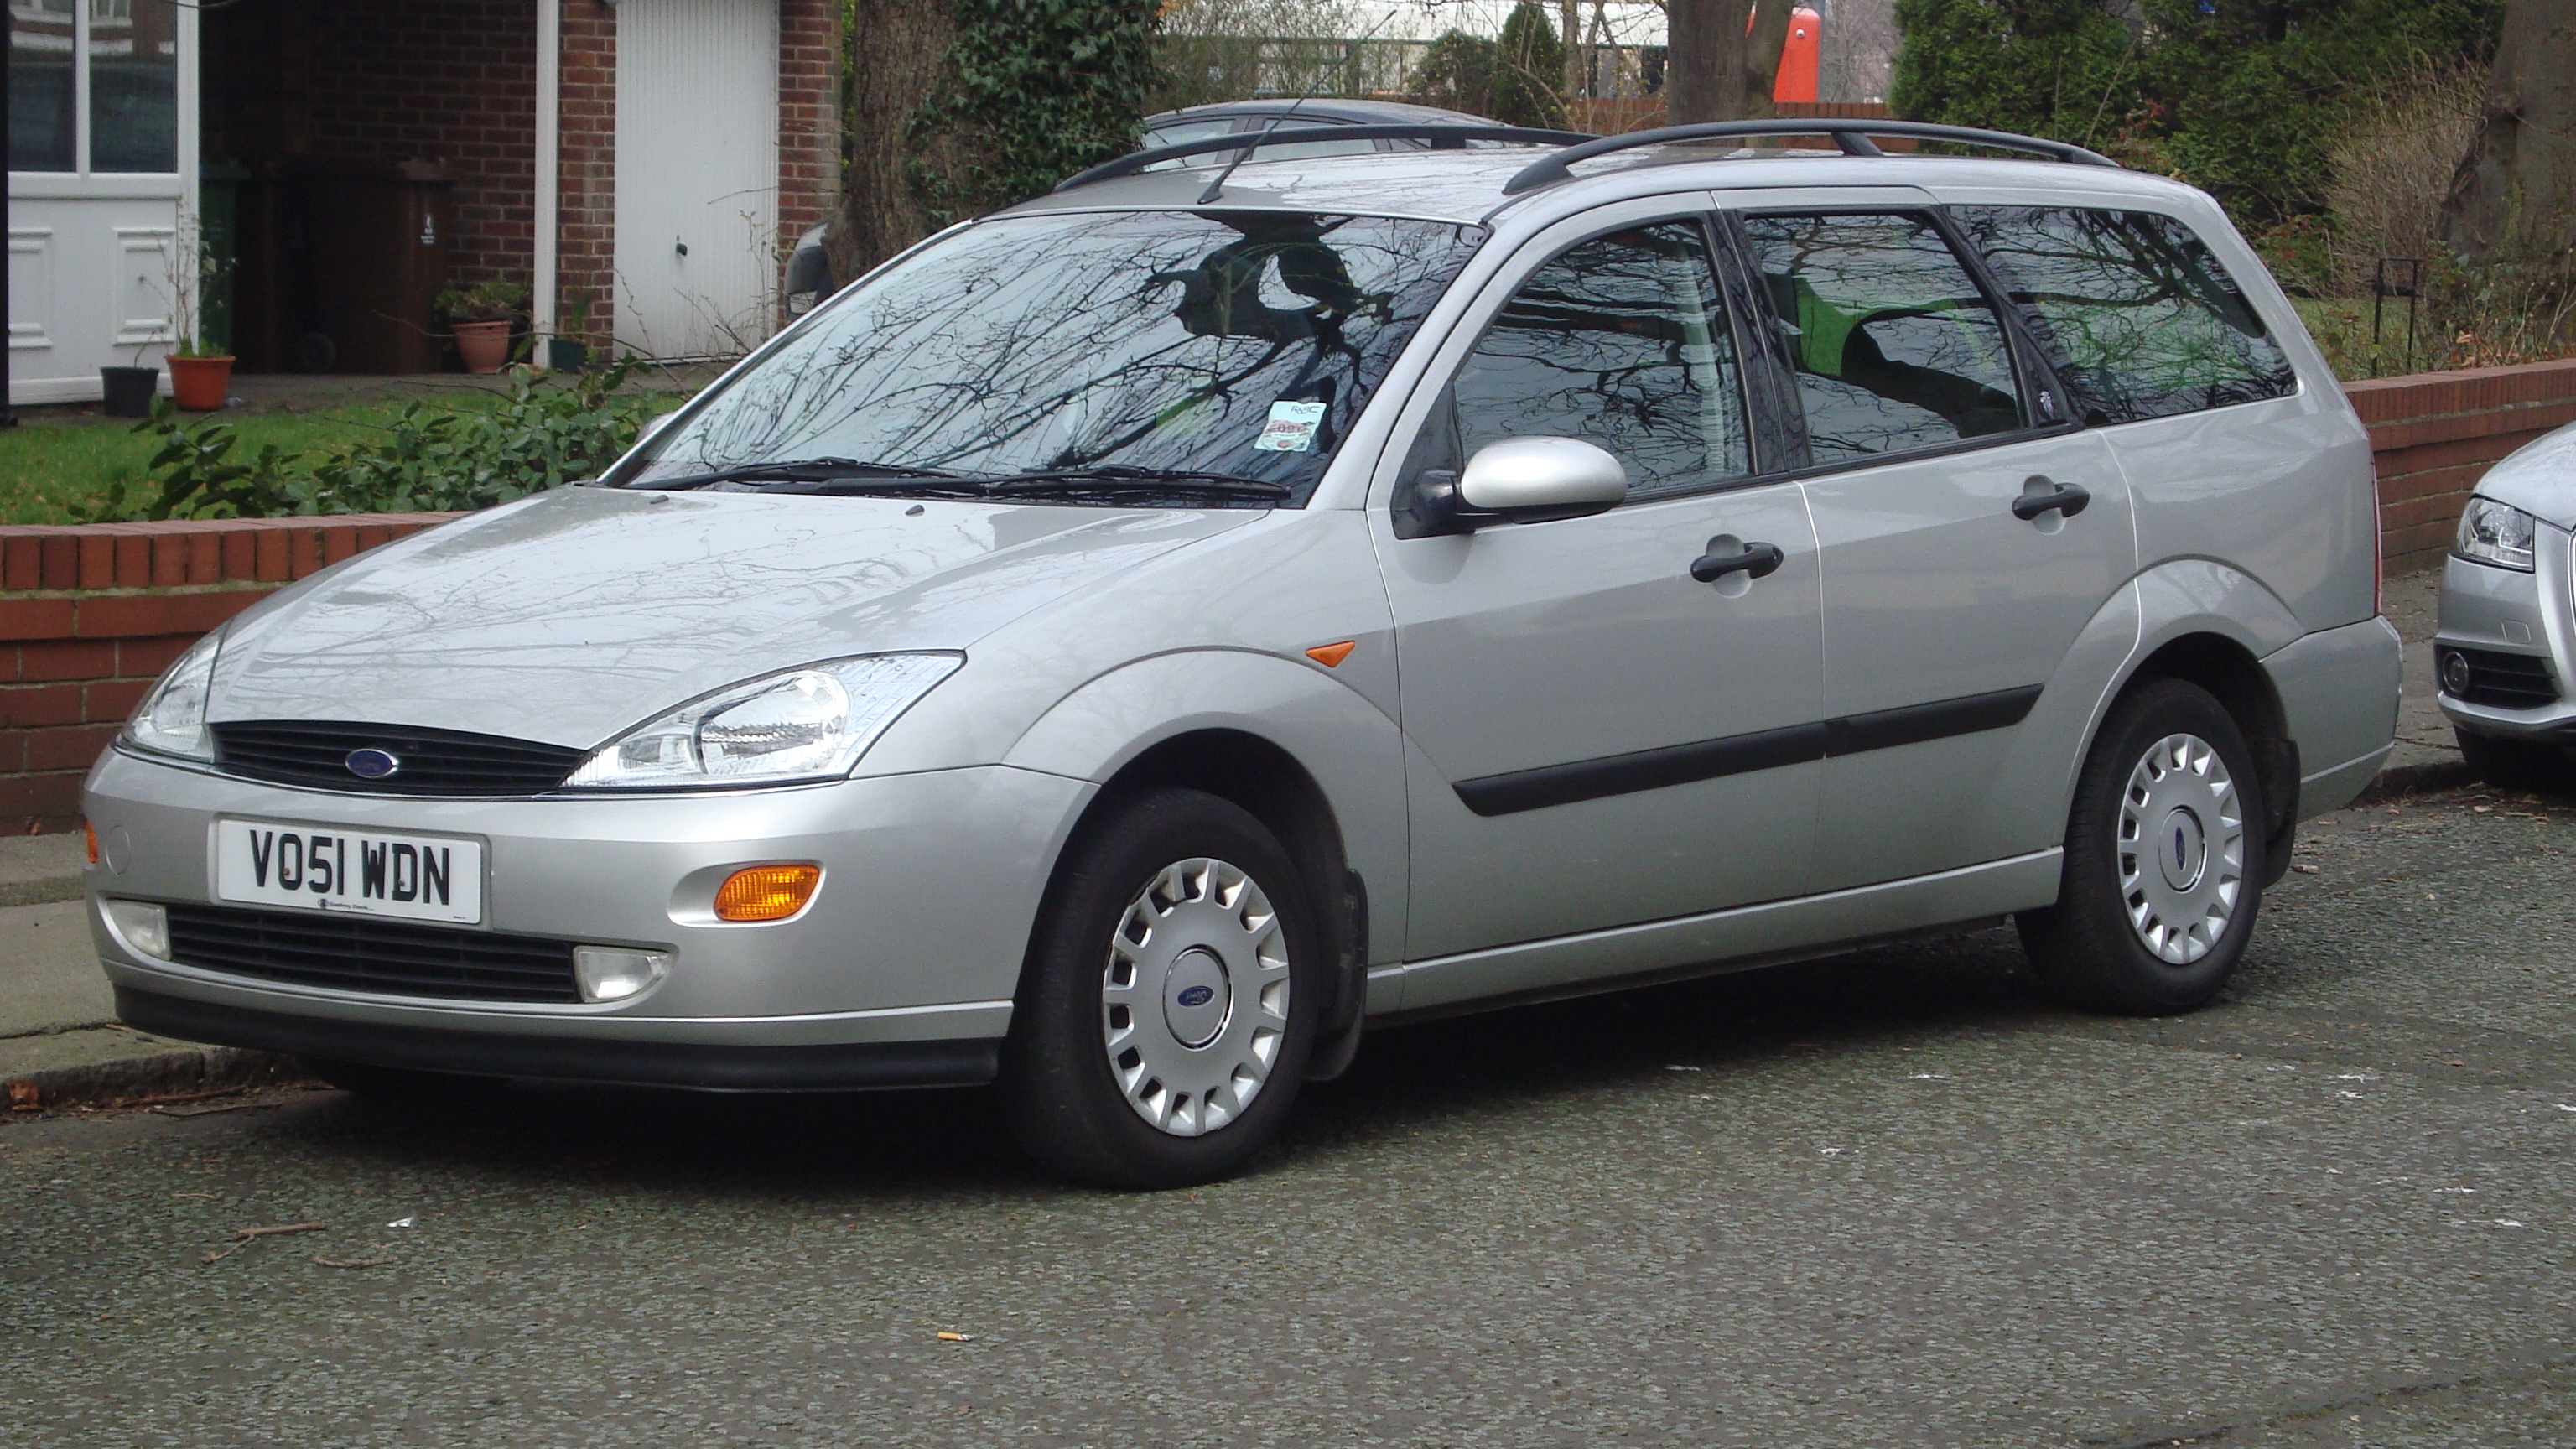 File:2001 Ford Focus 1.8 Ghia Estate (13147077363).jpg - Wikimedia Commons